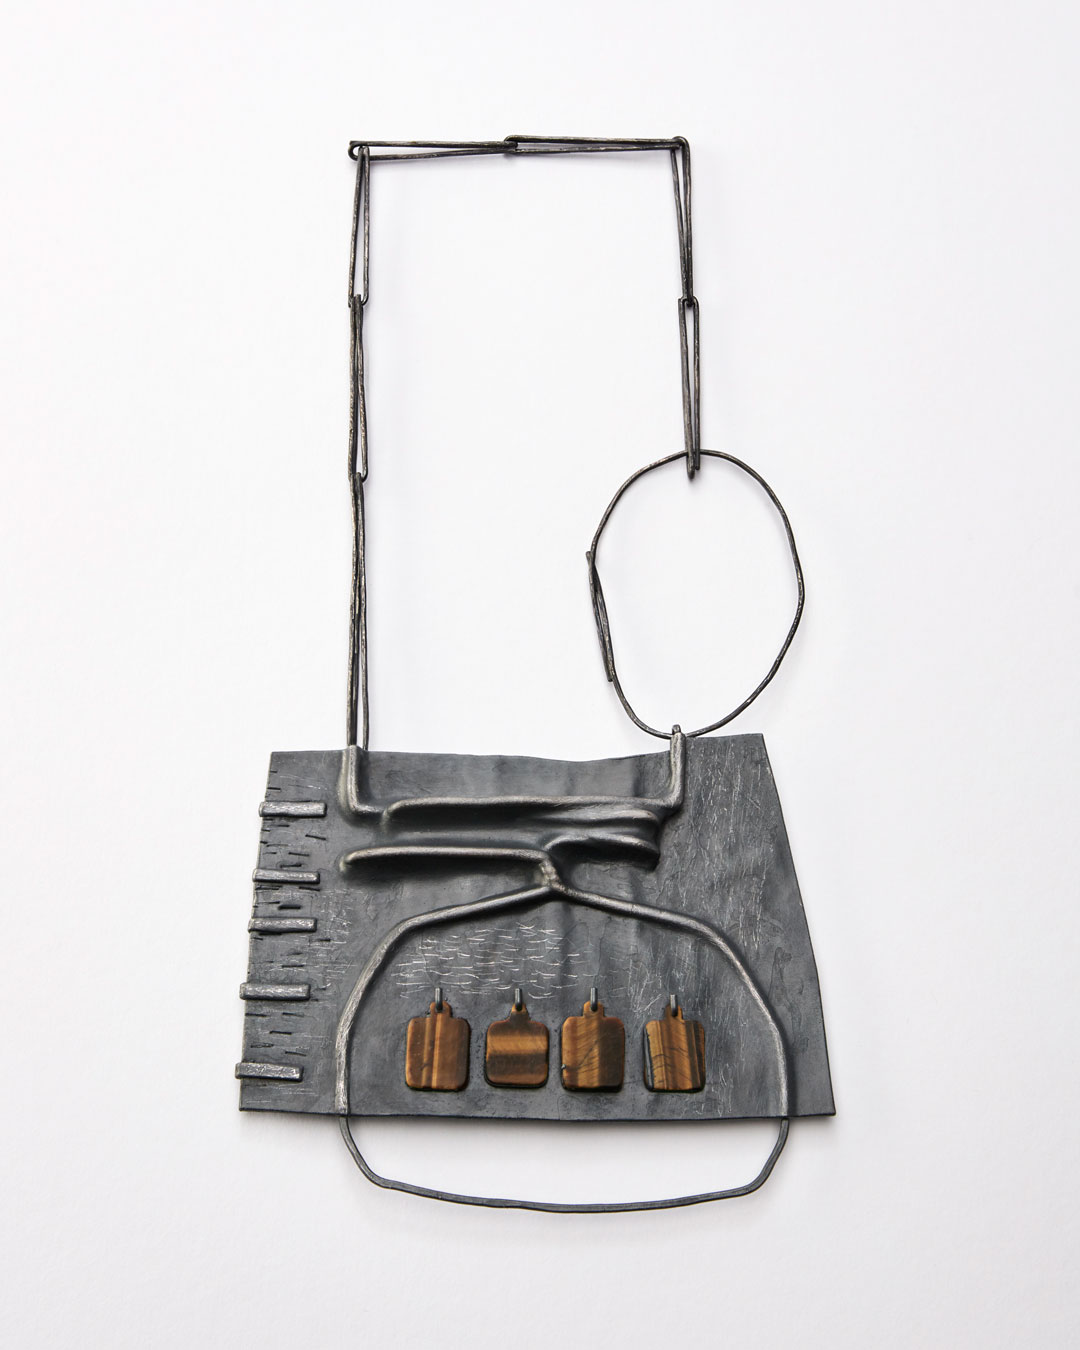 Iris Bodemer, Klang 3 (Sound 3), 2019, pendant; silver, thermoplastic, tiger's eye, 110 x 135 x 10 mm, €4250